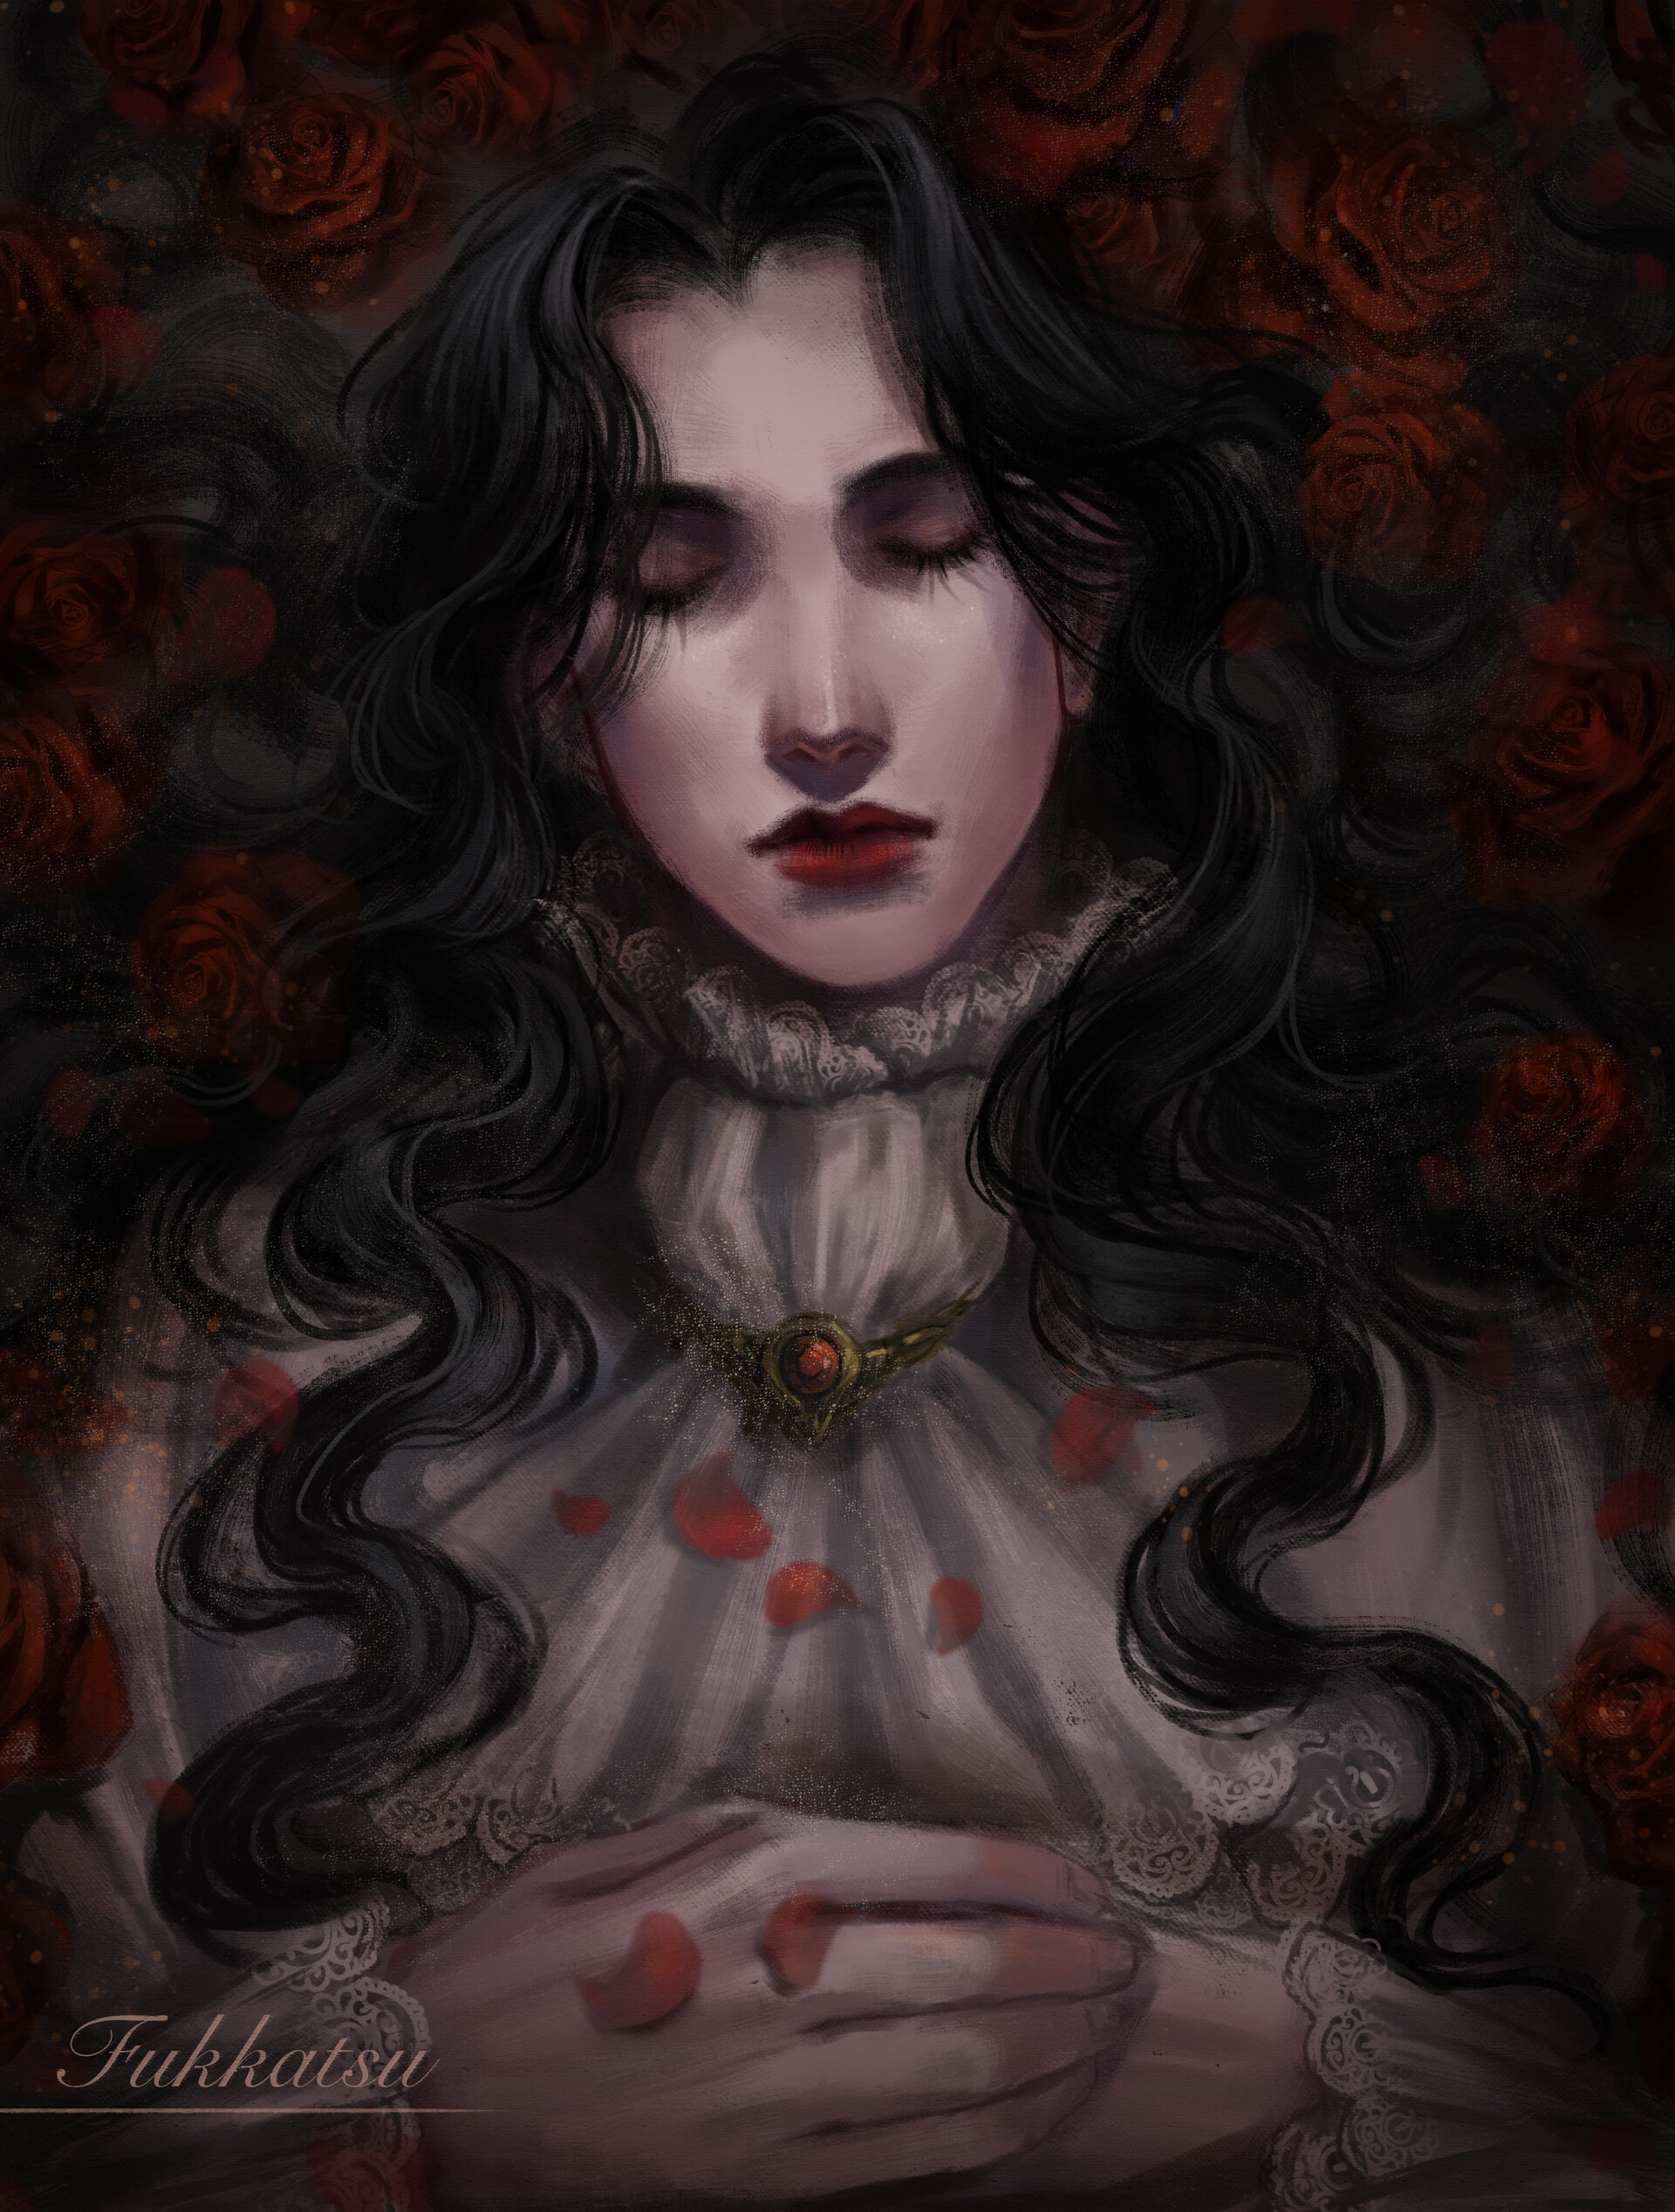 ArtStation - Portrait with roses